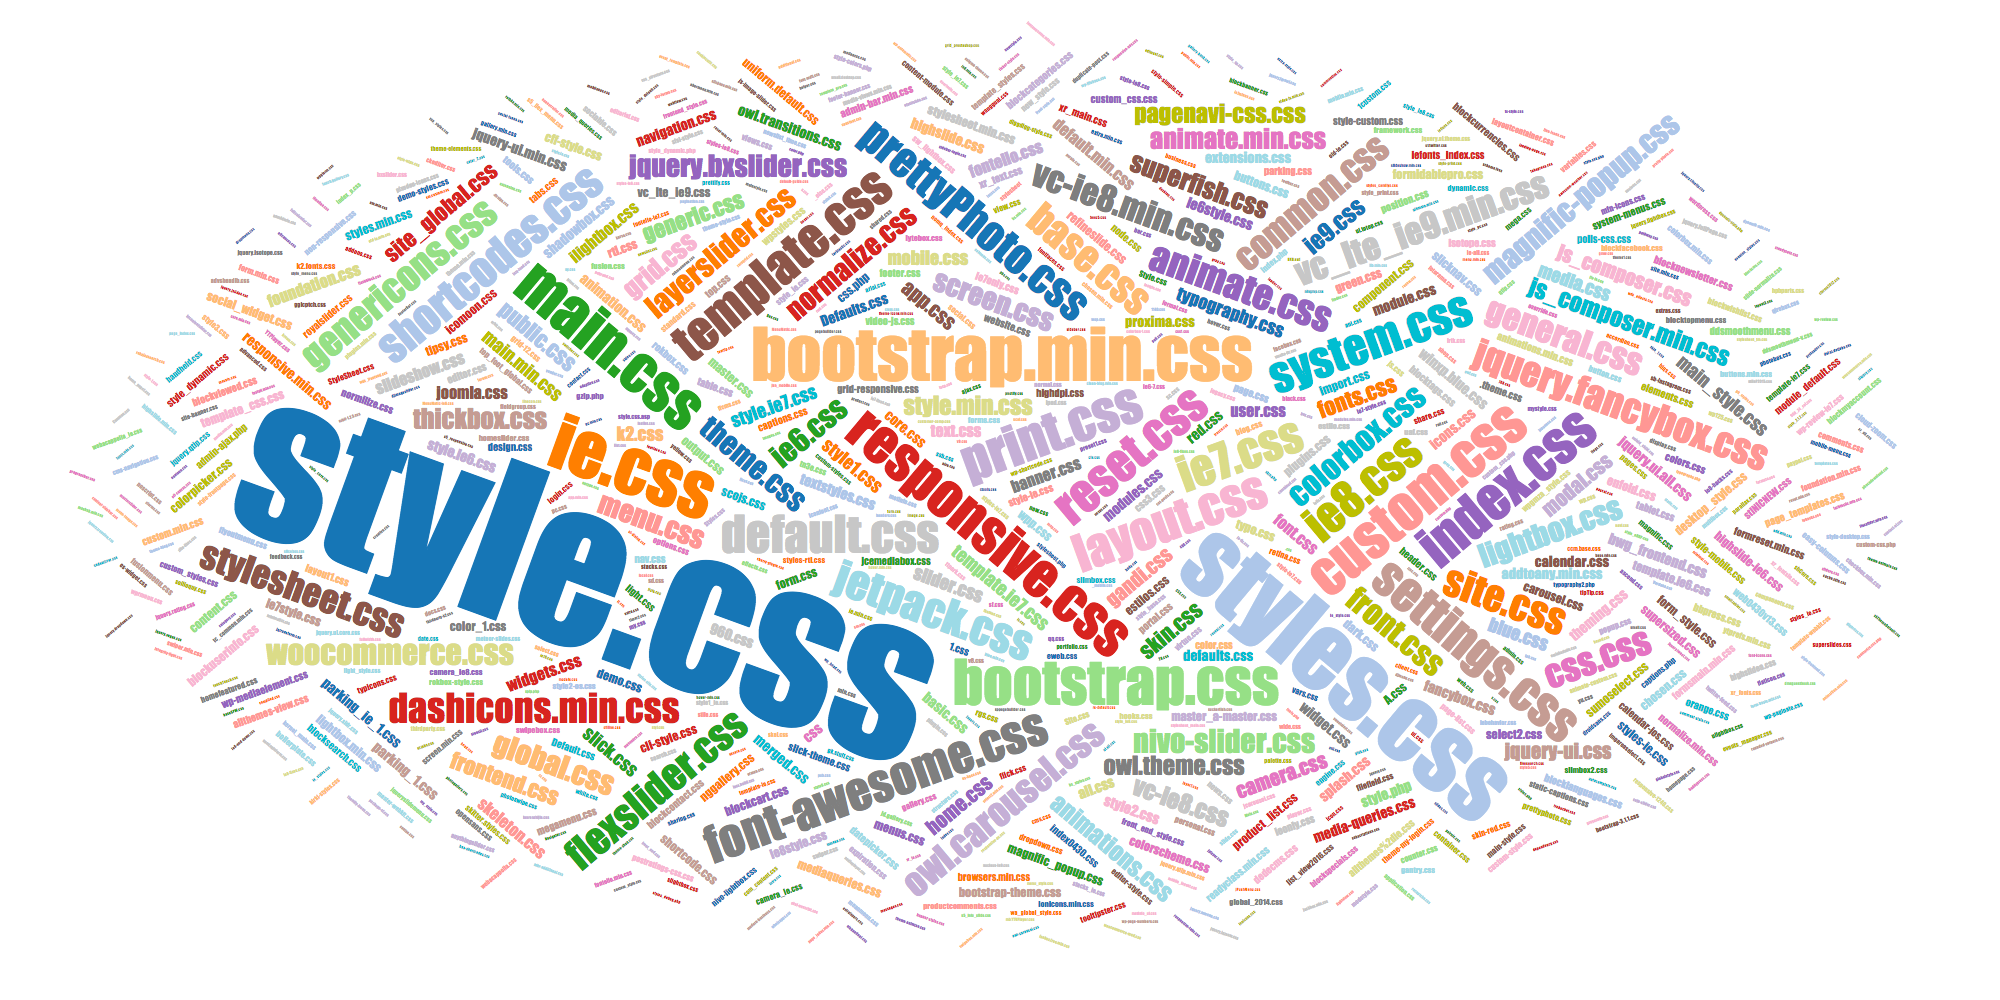 Popular names of CSS files k2.css, kirki-styles.css, etc.